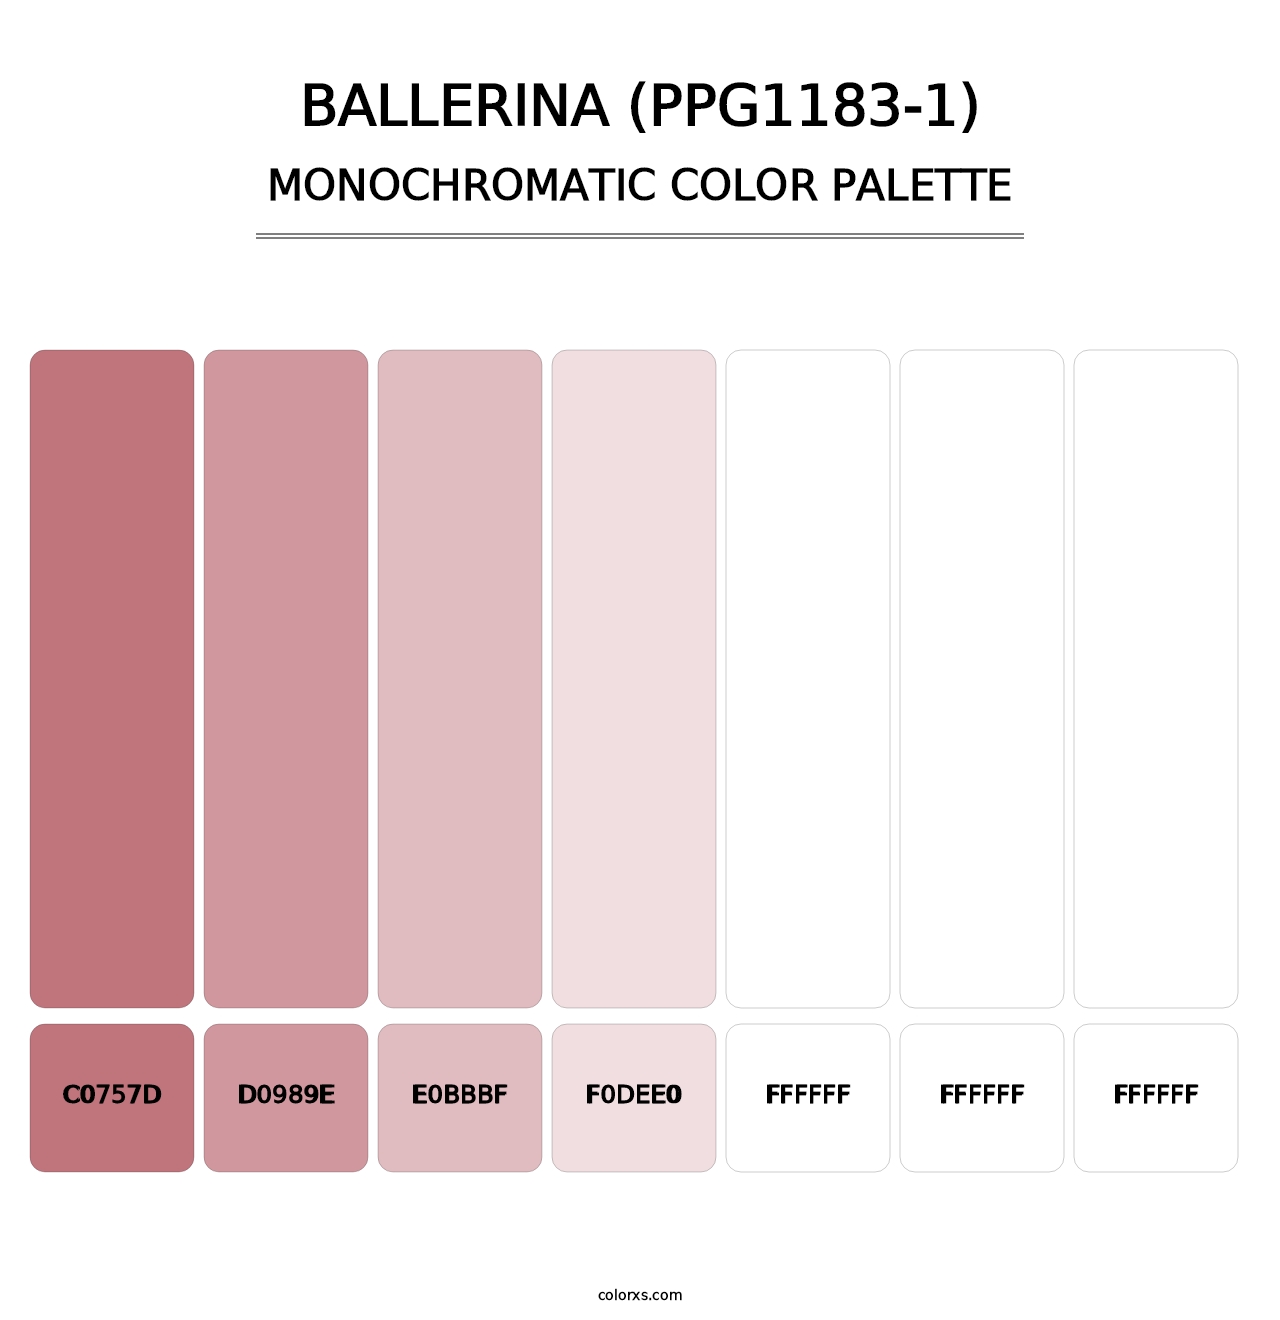 Ballerina (PPG1183-1) - Monochromatic Color Palette